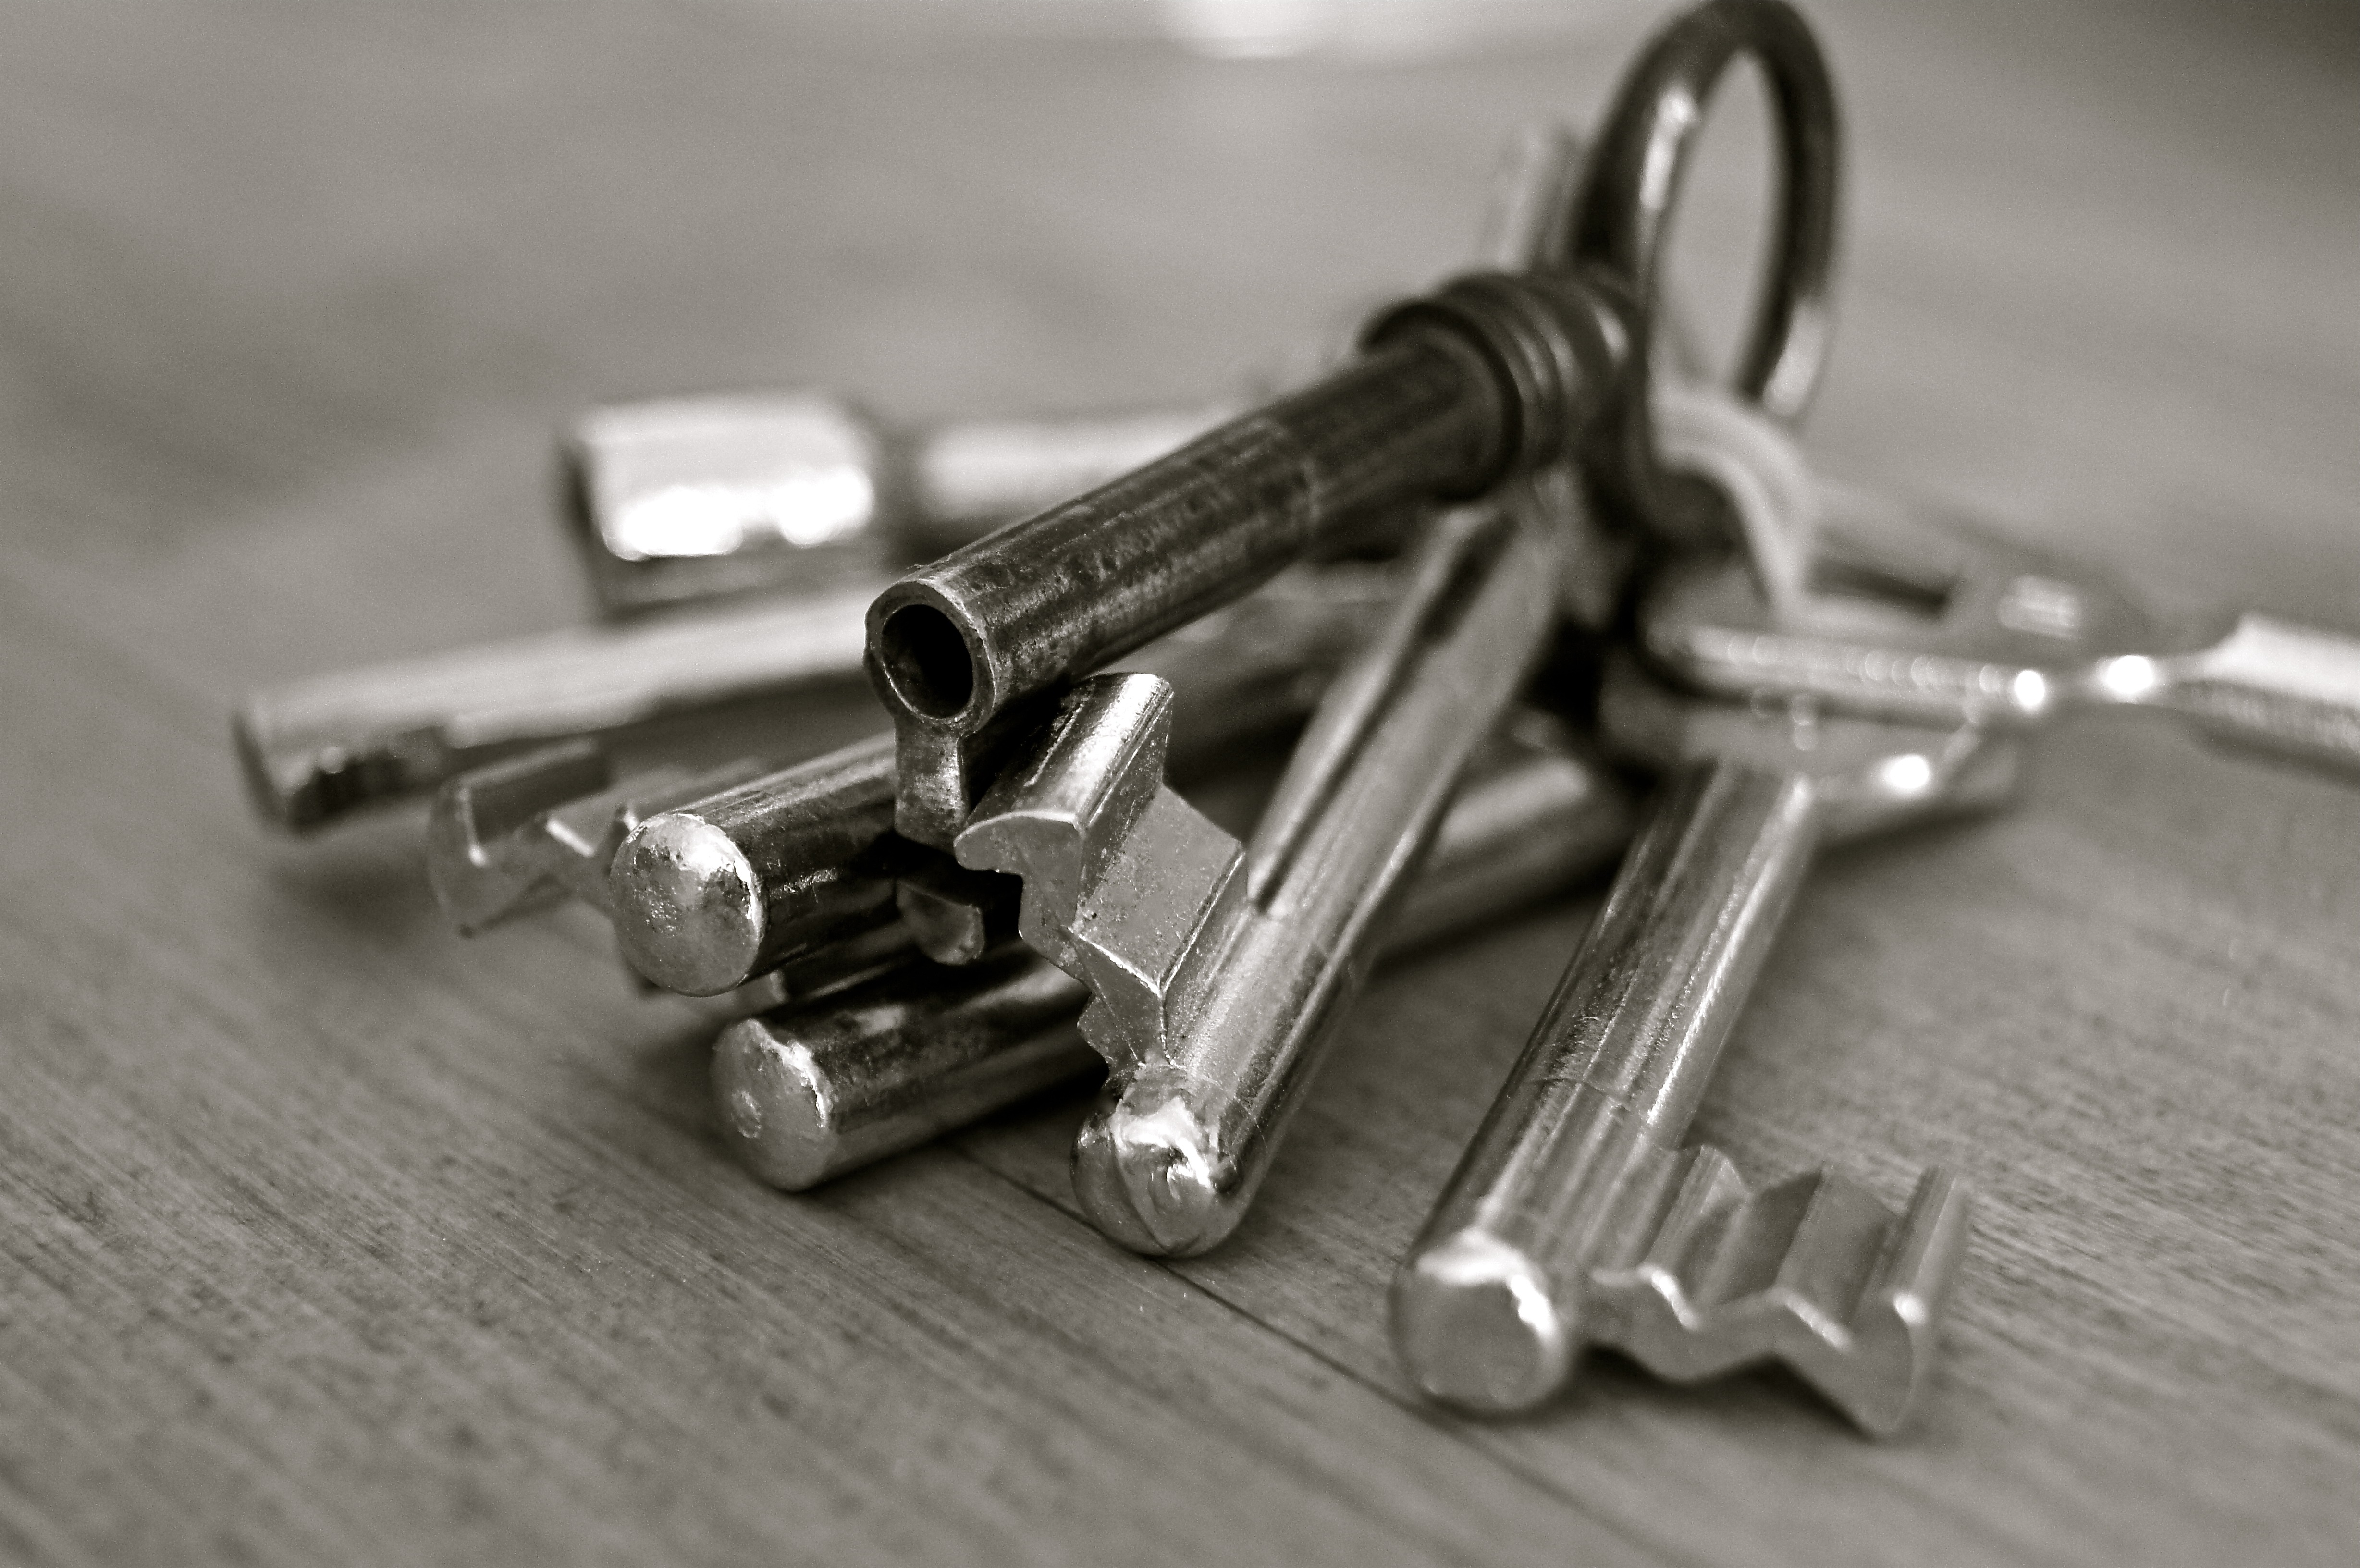 Tangled Keys: A Tale of Self Discovery